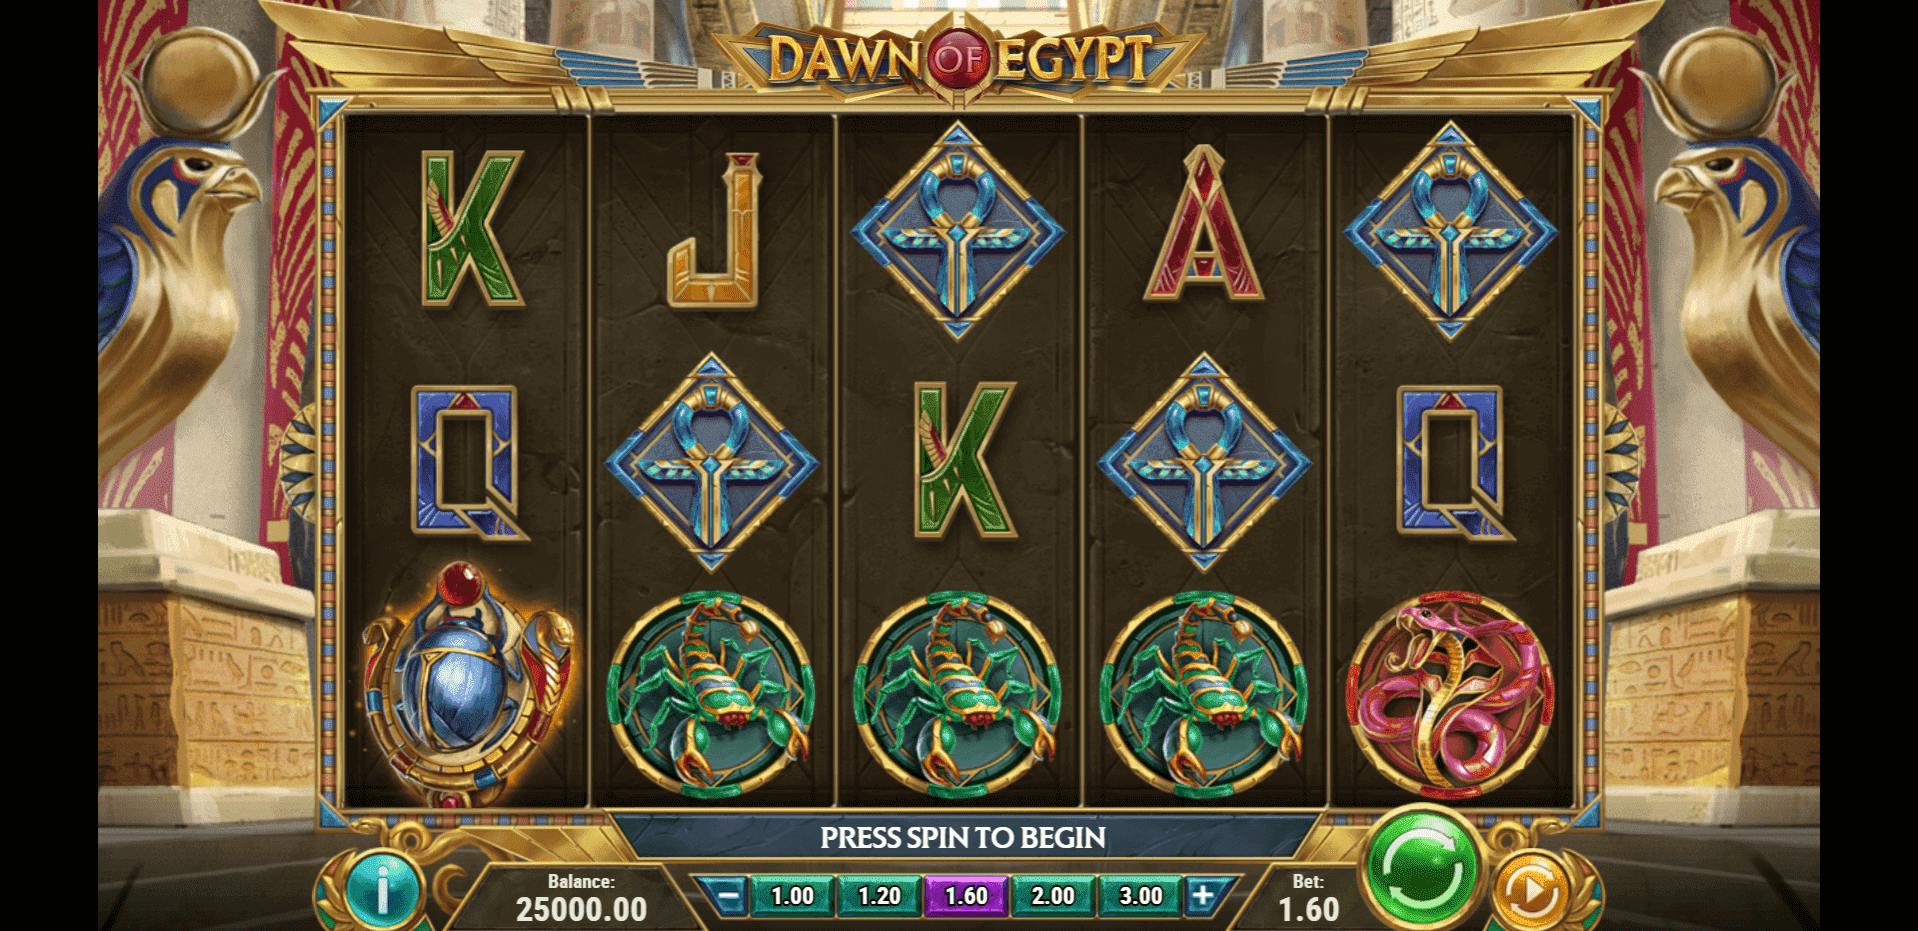 Dawn of Egypt slot play free